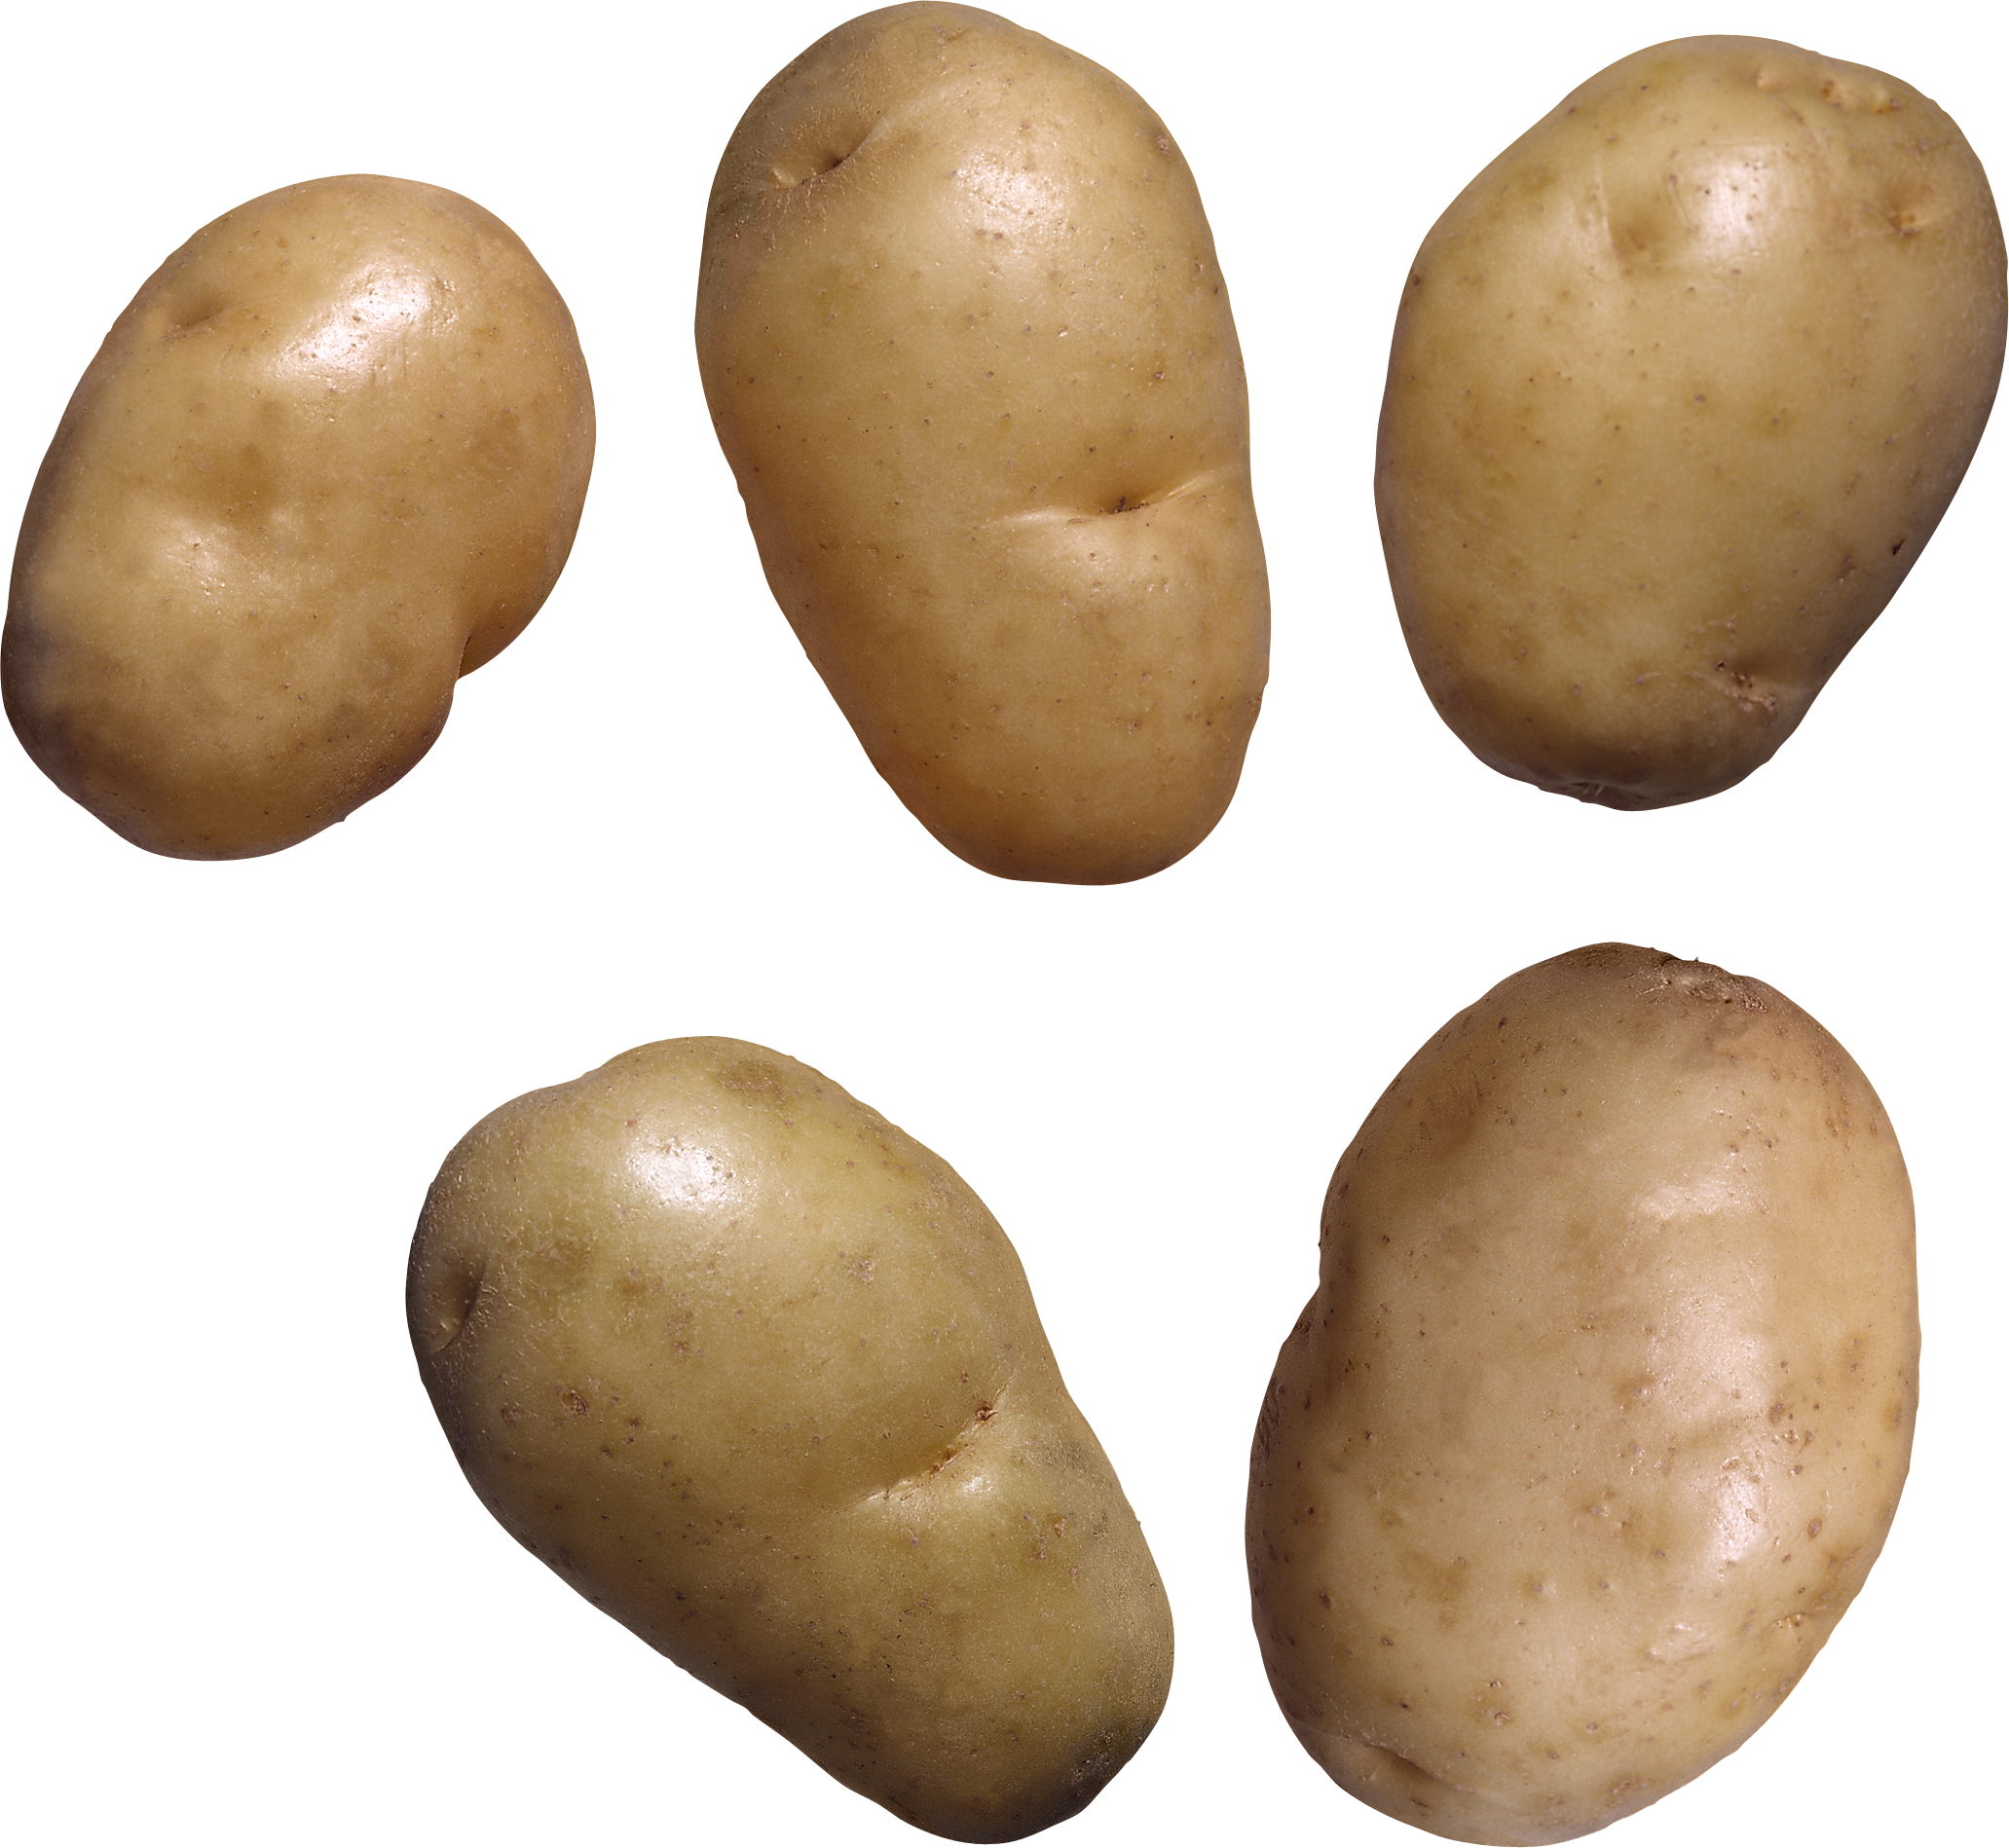 Potato Png Images - Potato, Transparent background PNG HD thumbnail